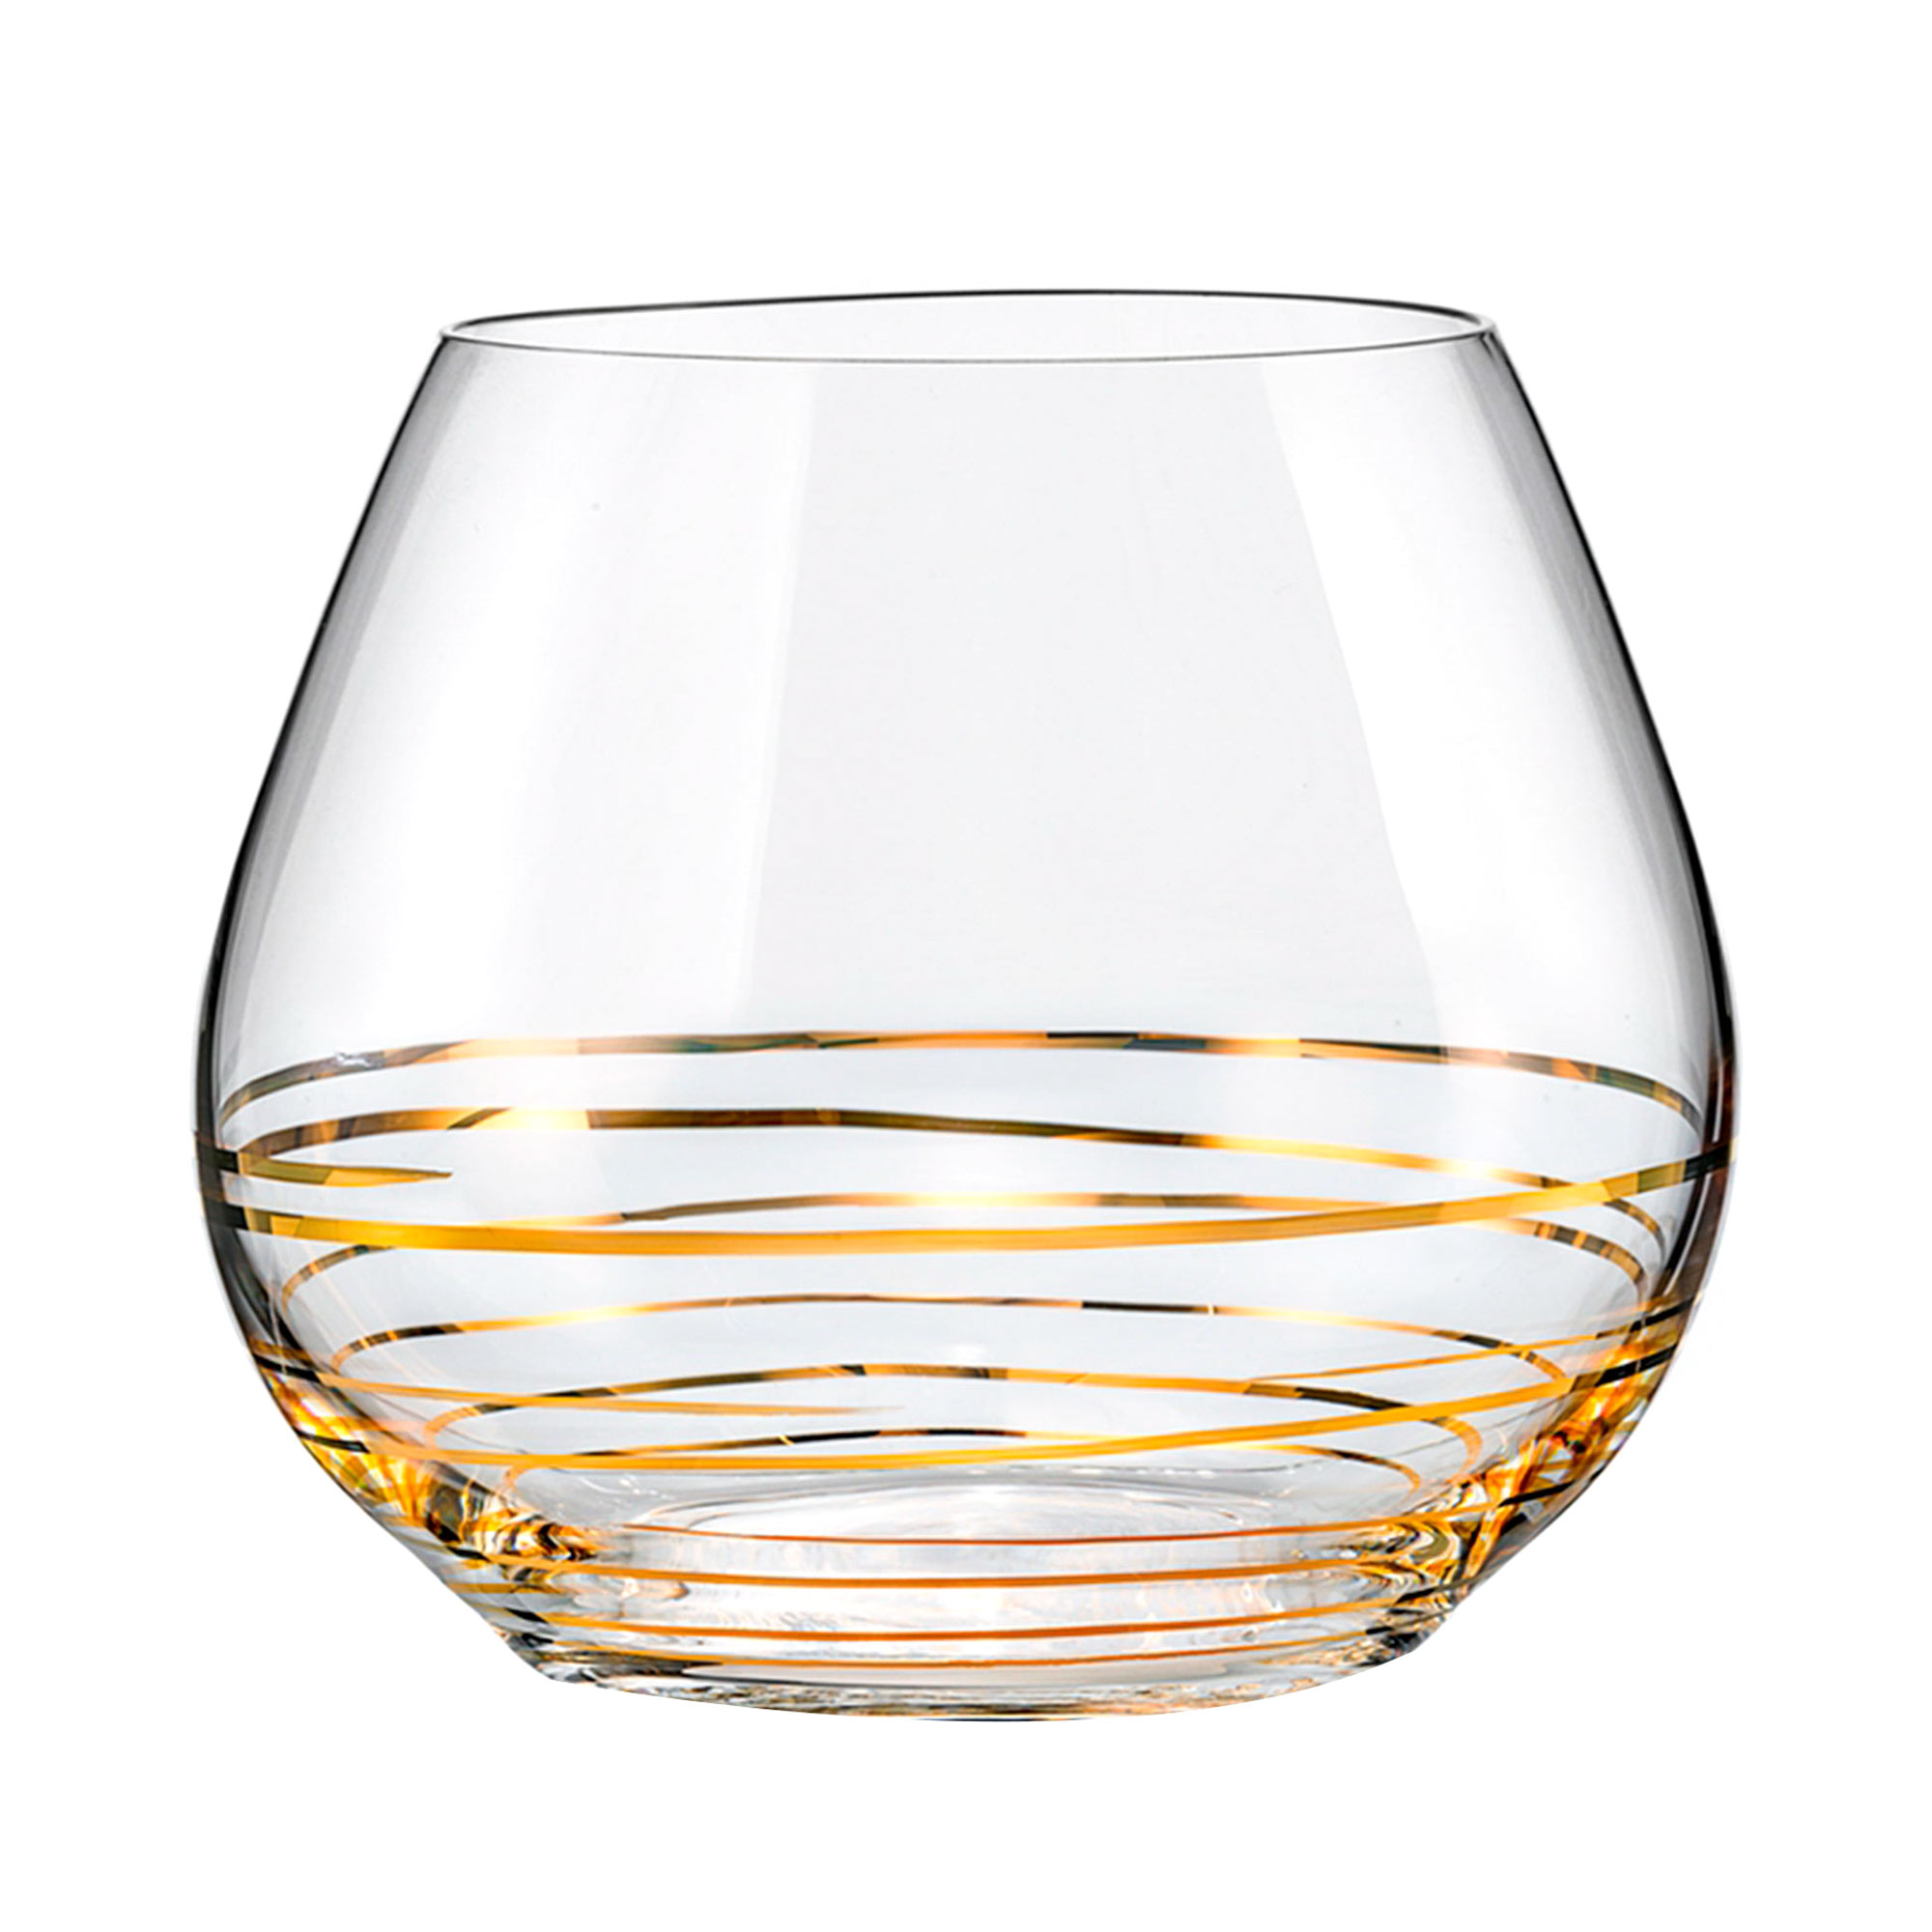 Набор бокалов для виски Аморосо 440 мл 2 шт набор стак для виски patriot gold 6 200мл crystal bohemia 990 23203 0 72232 200 609